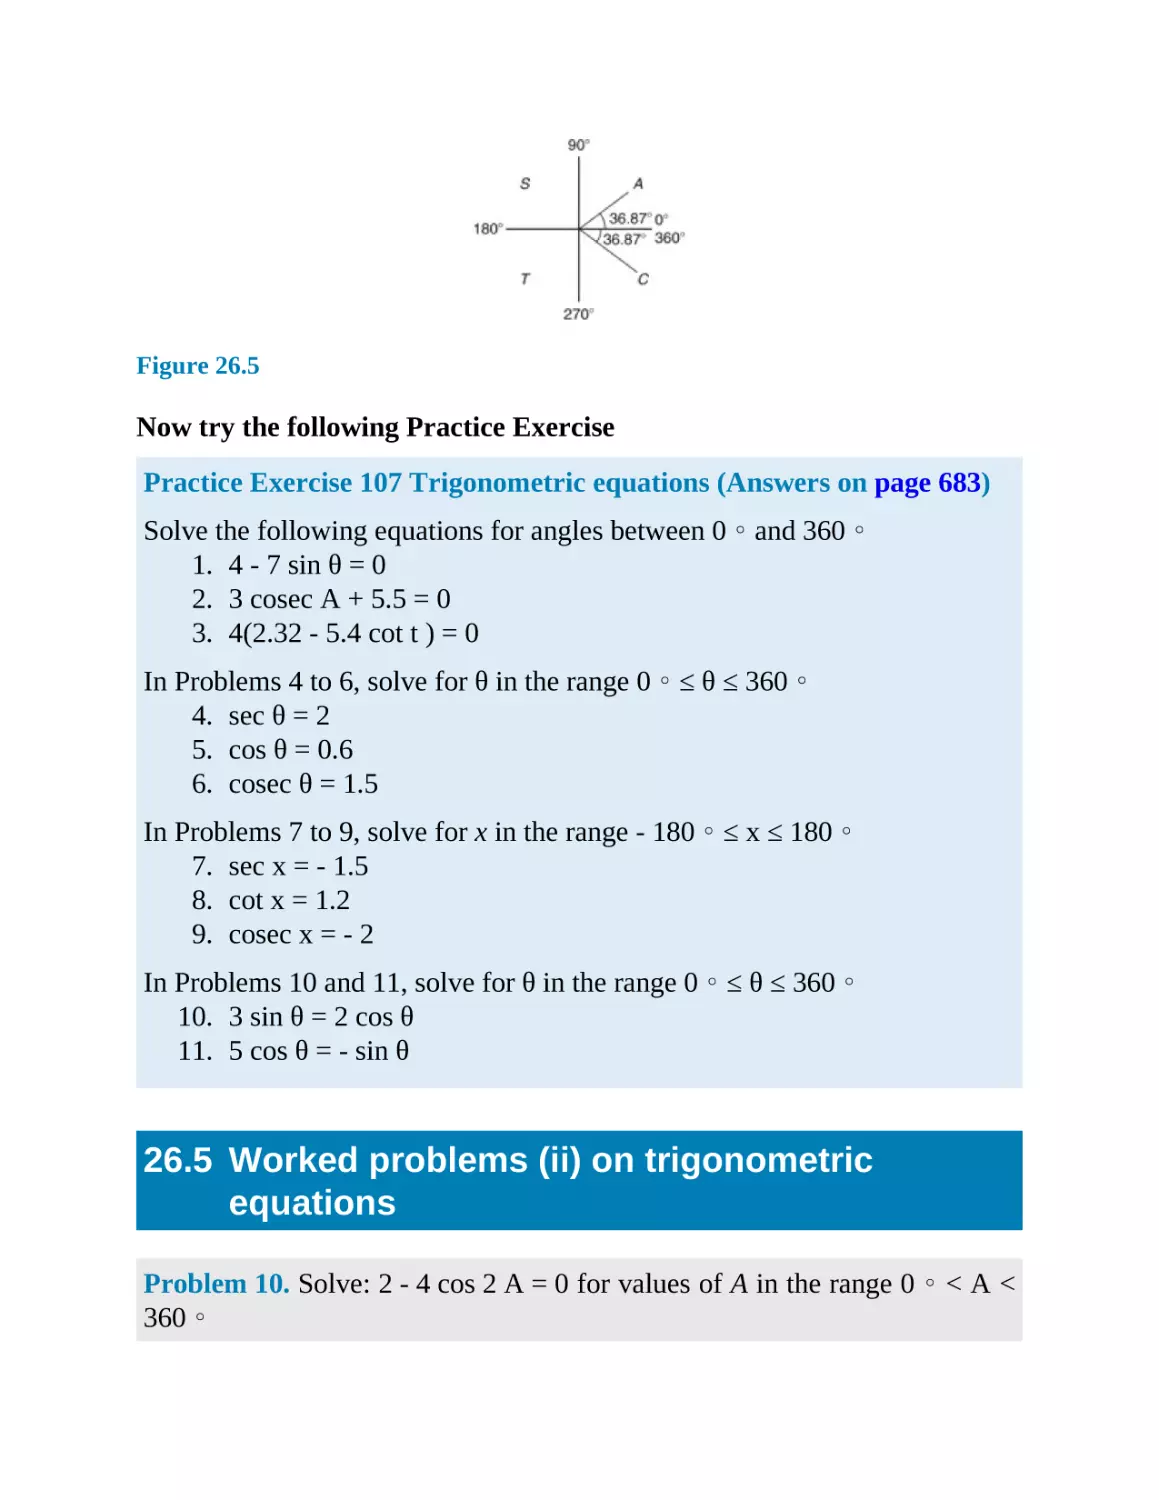 26.5 Worked problems (ii) on trigonometric equations